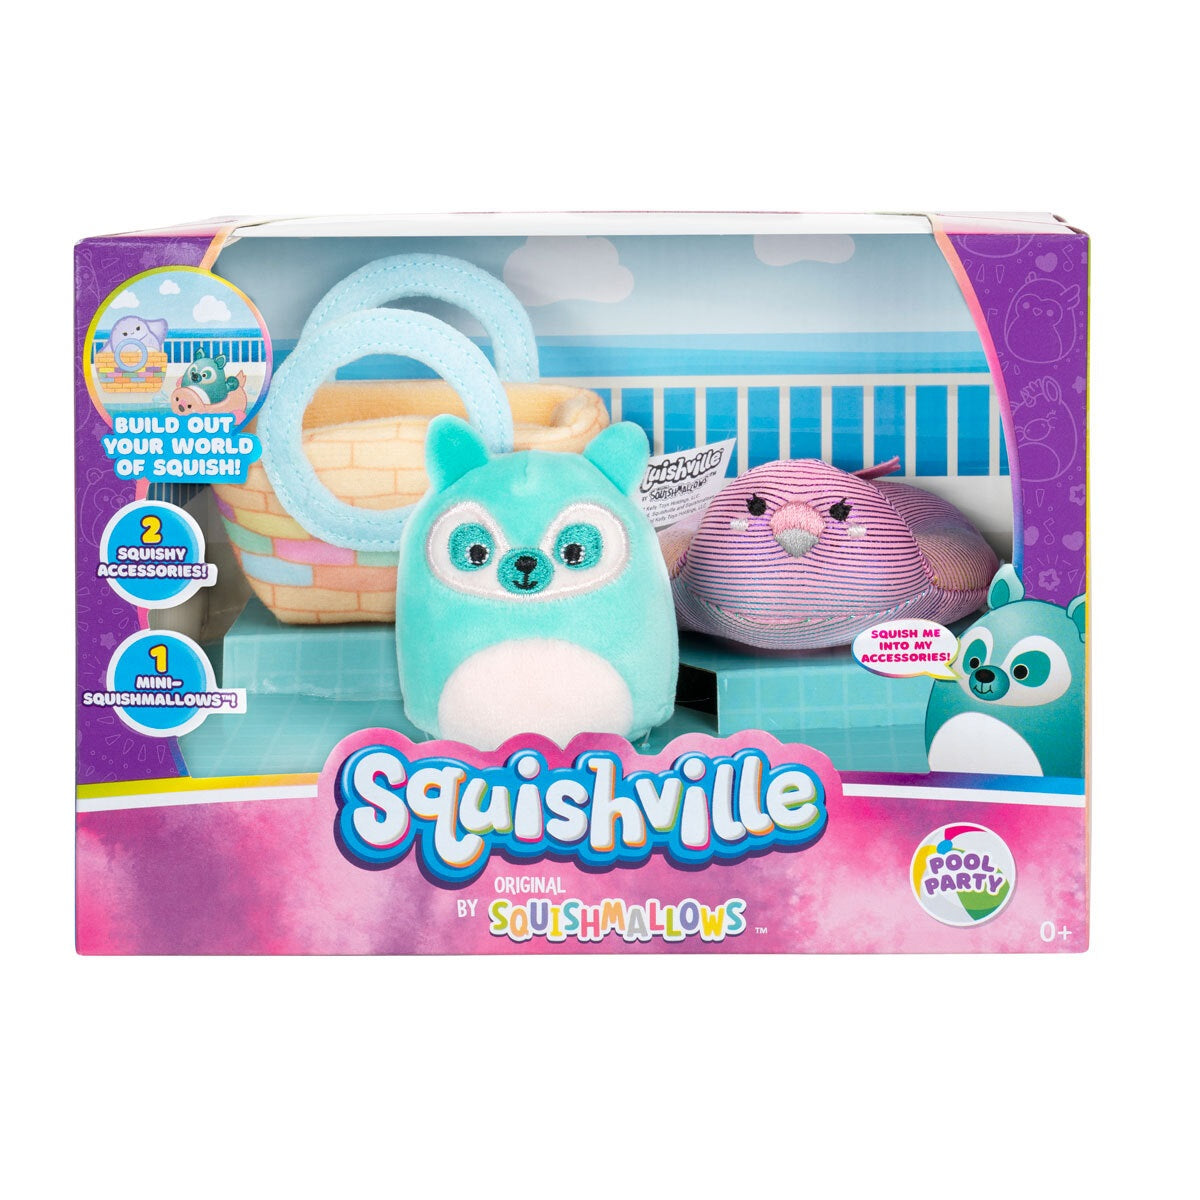 Squishville 2' Mini Squishmallows Accessory Set - Pool Party